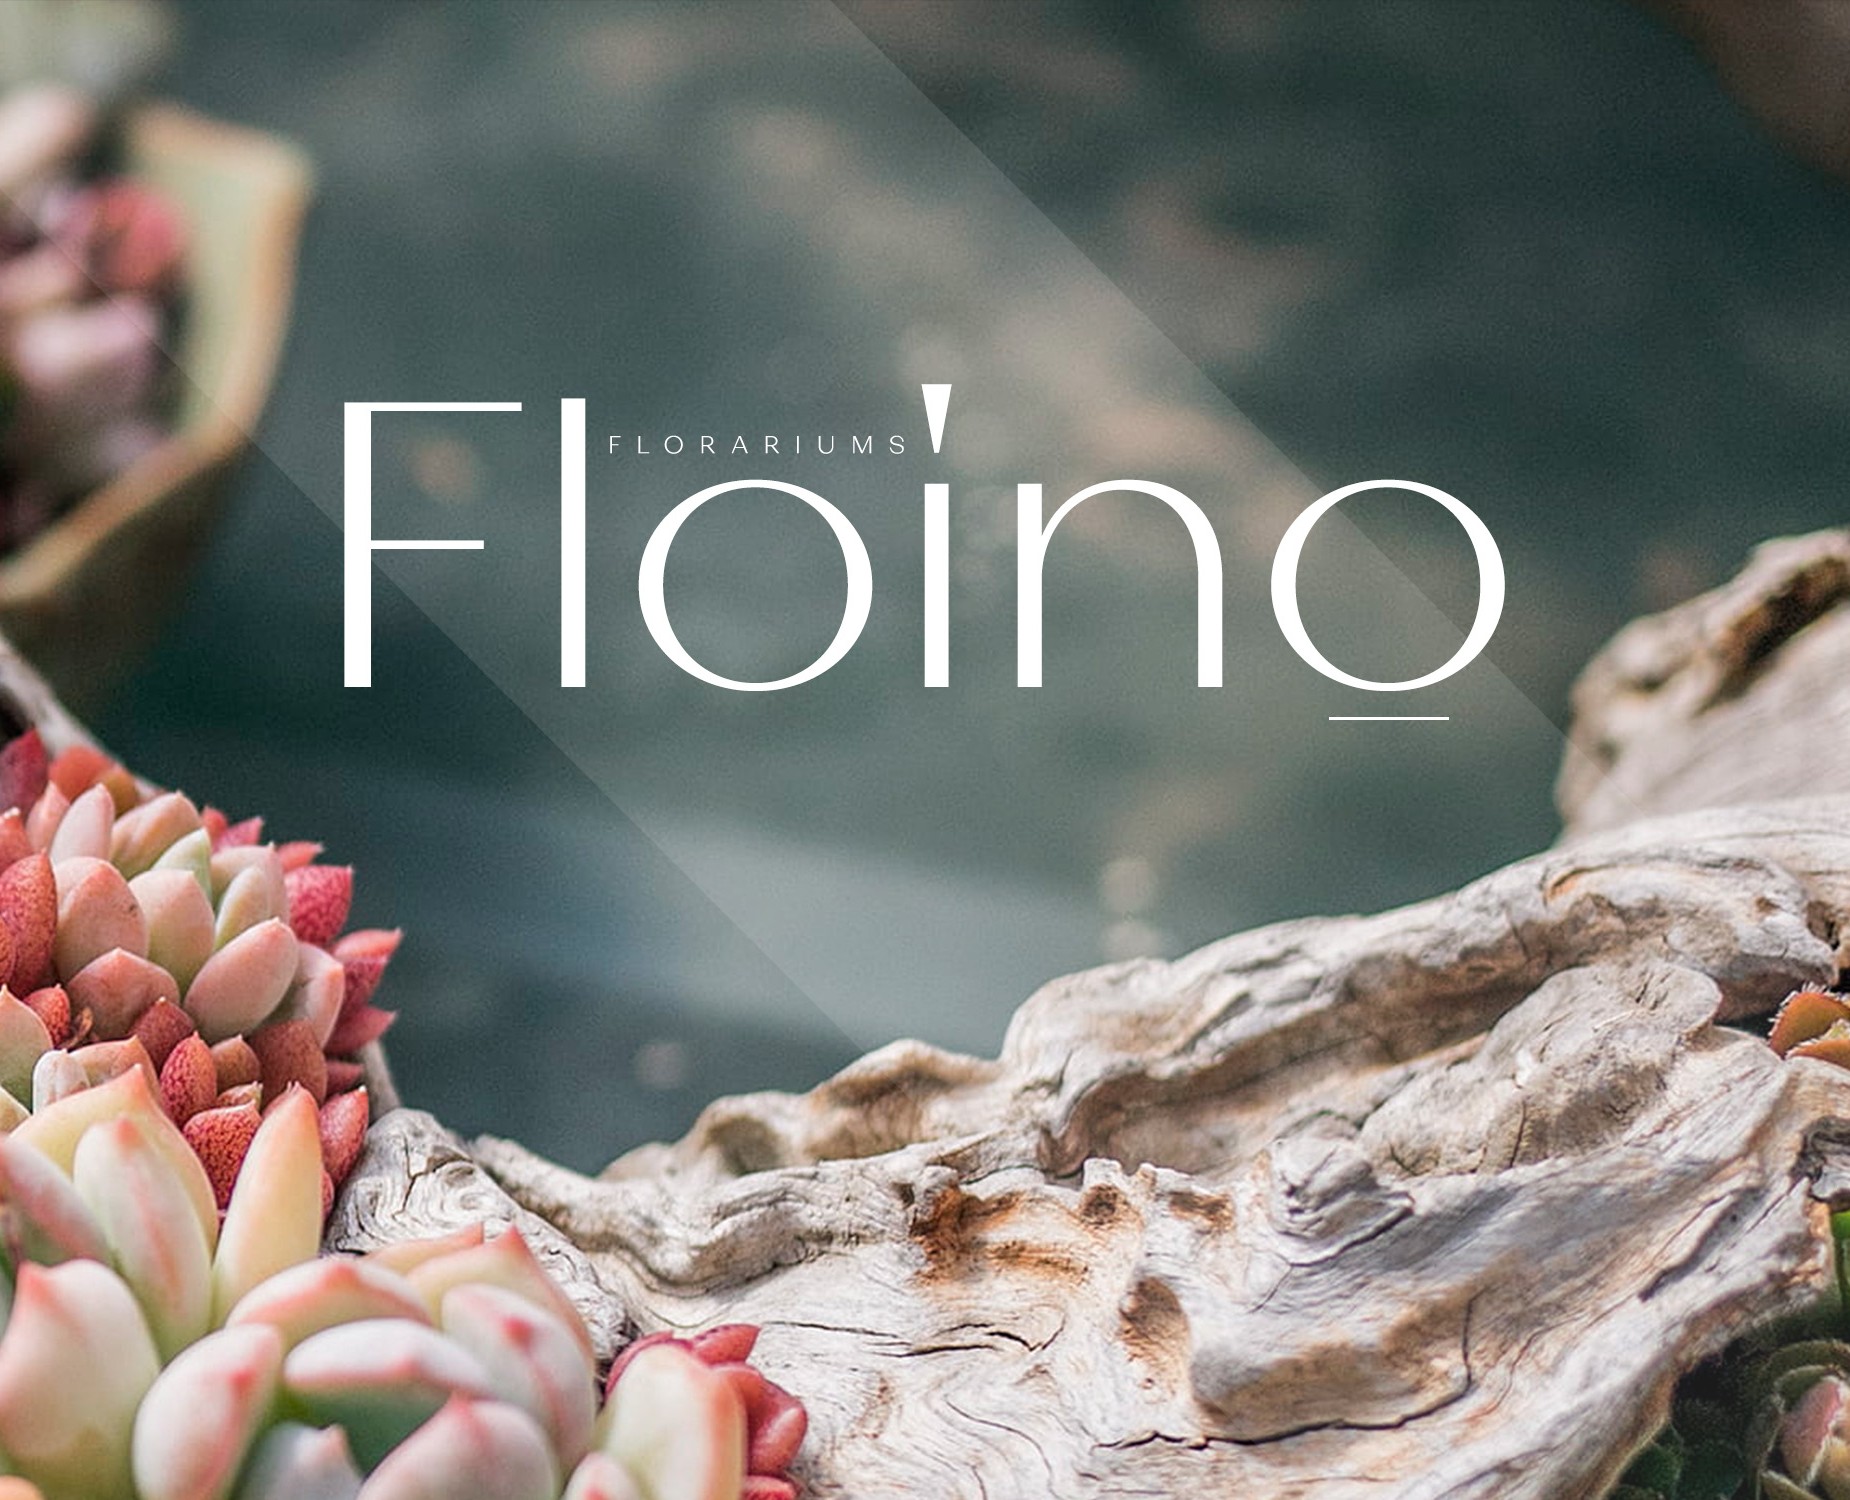 Landing page - Floino Florarium — Интерфейсы, Маркетинг на Dprofile